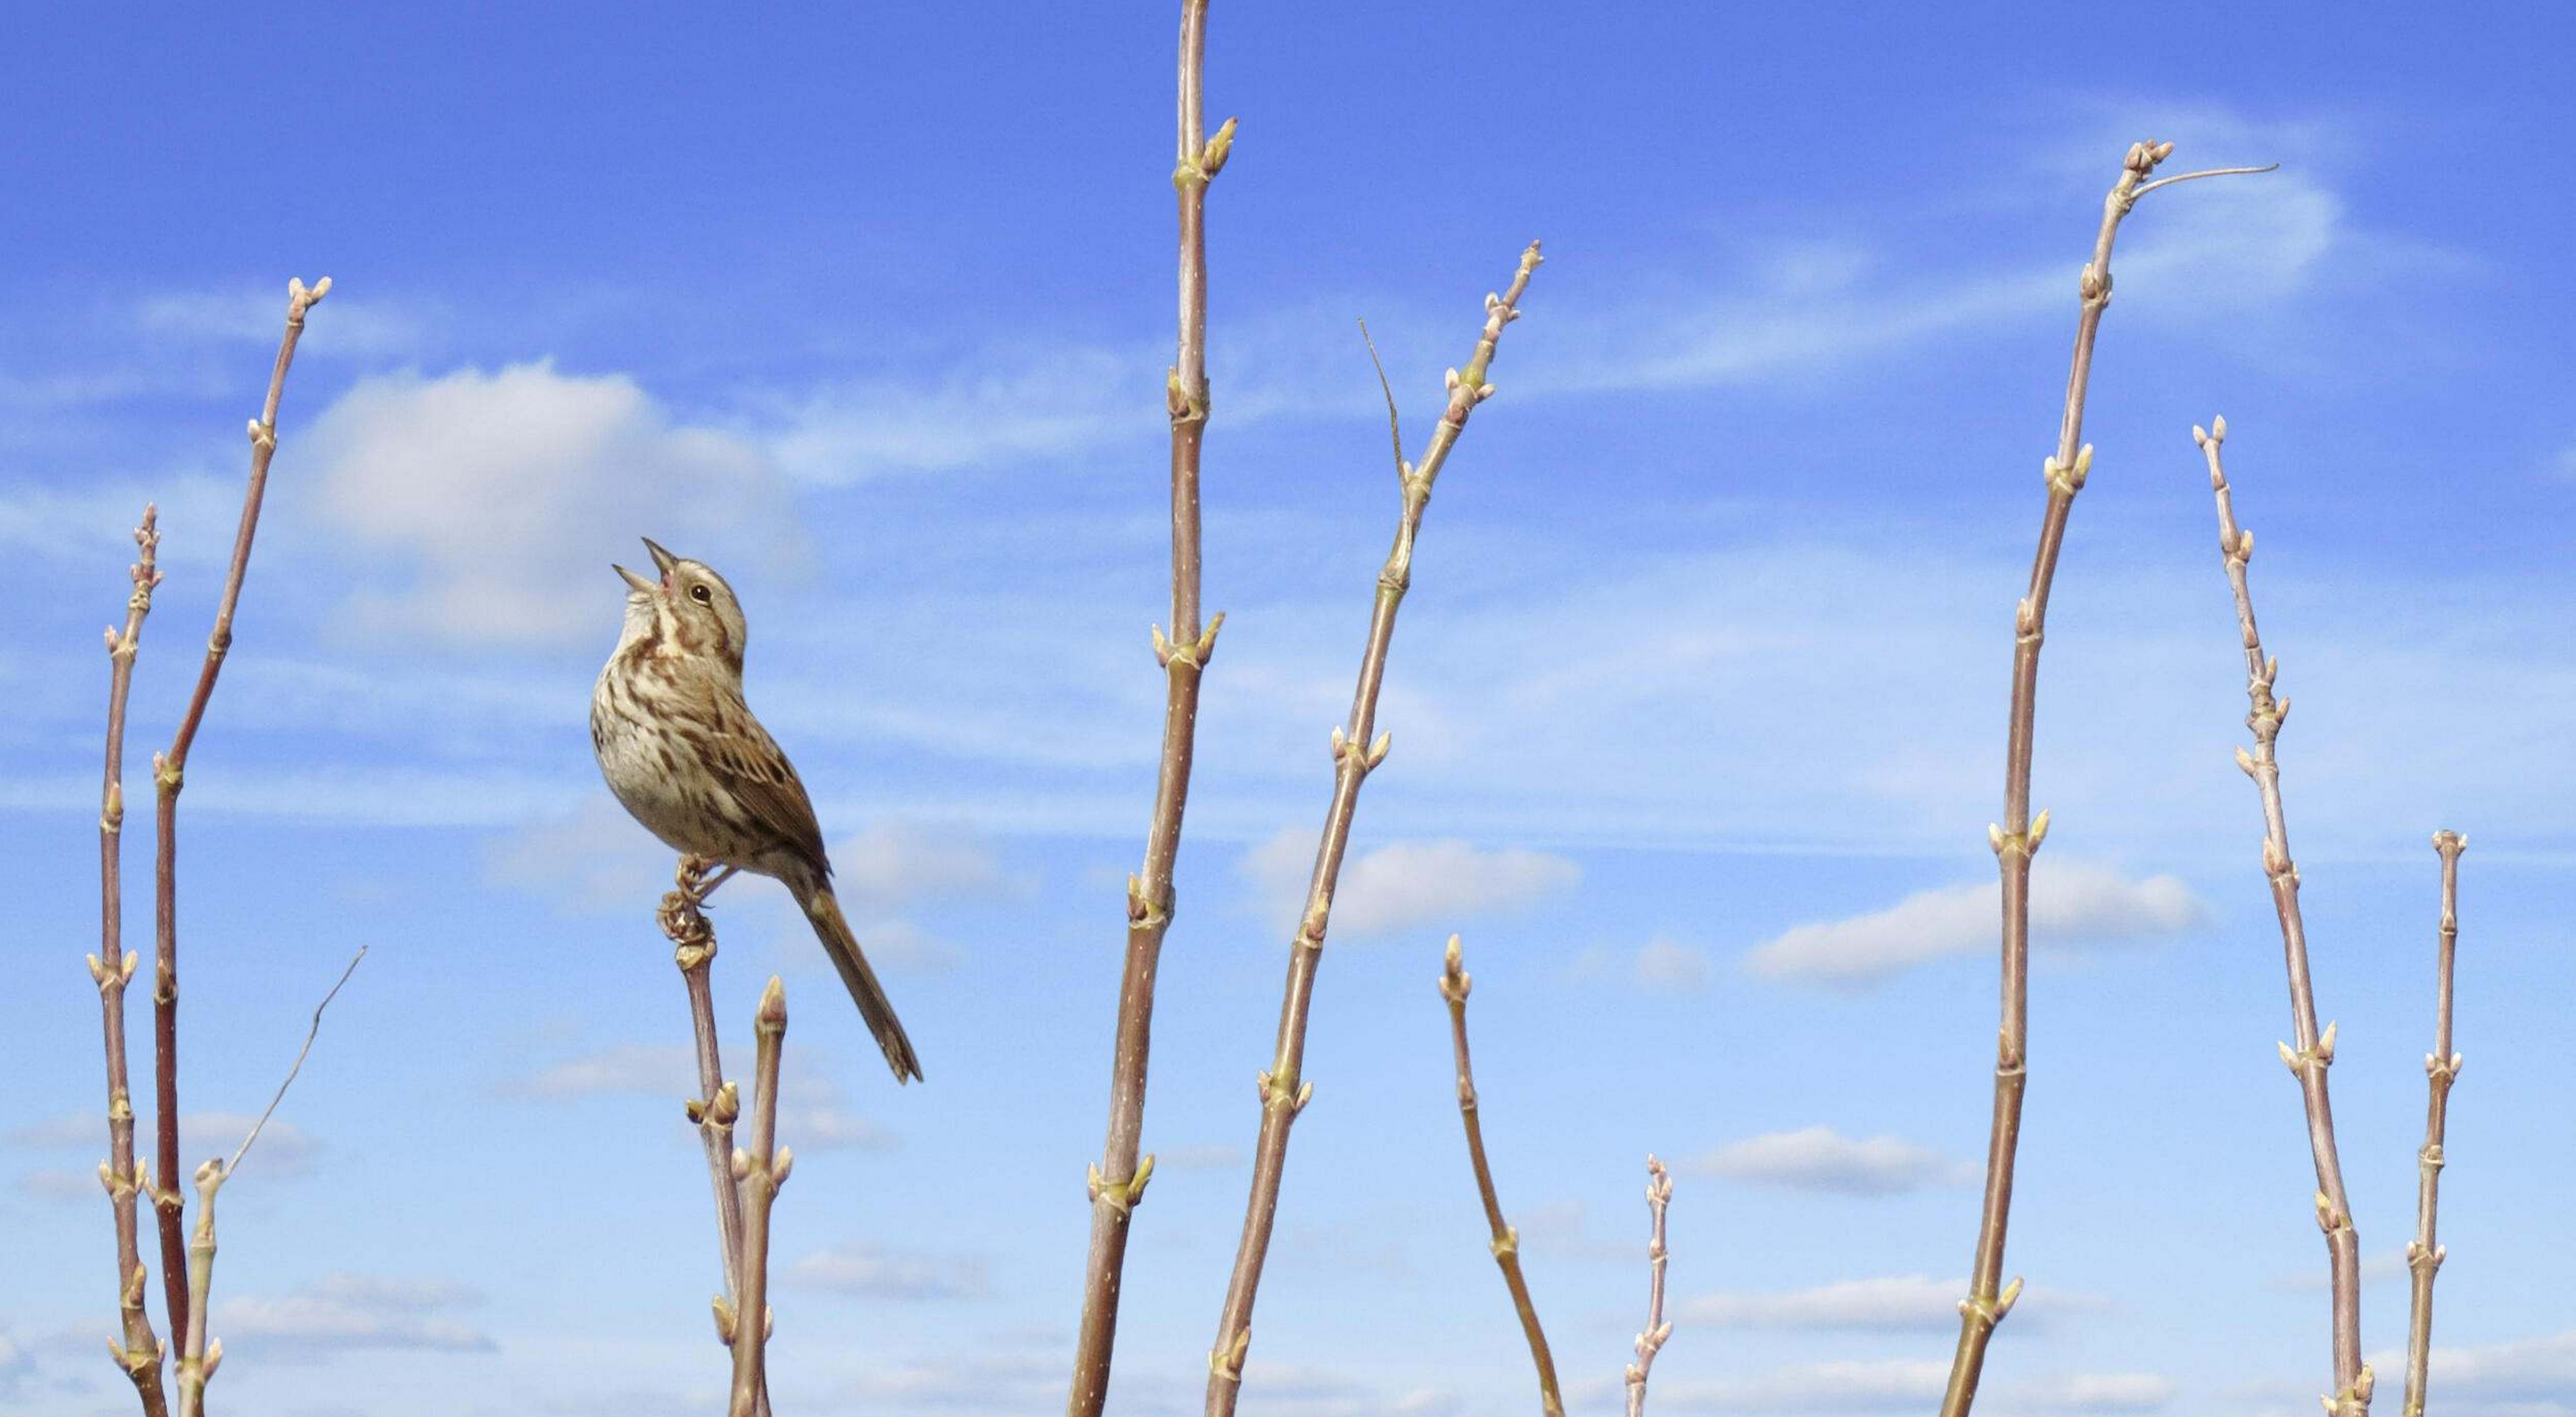 a song sparrow perched atop a barren tree.